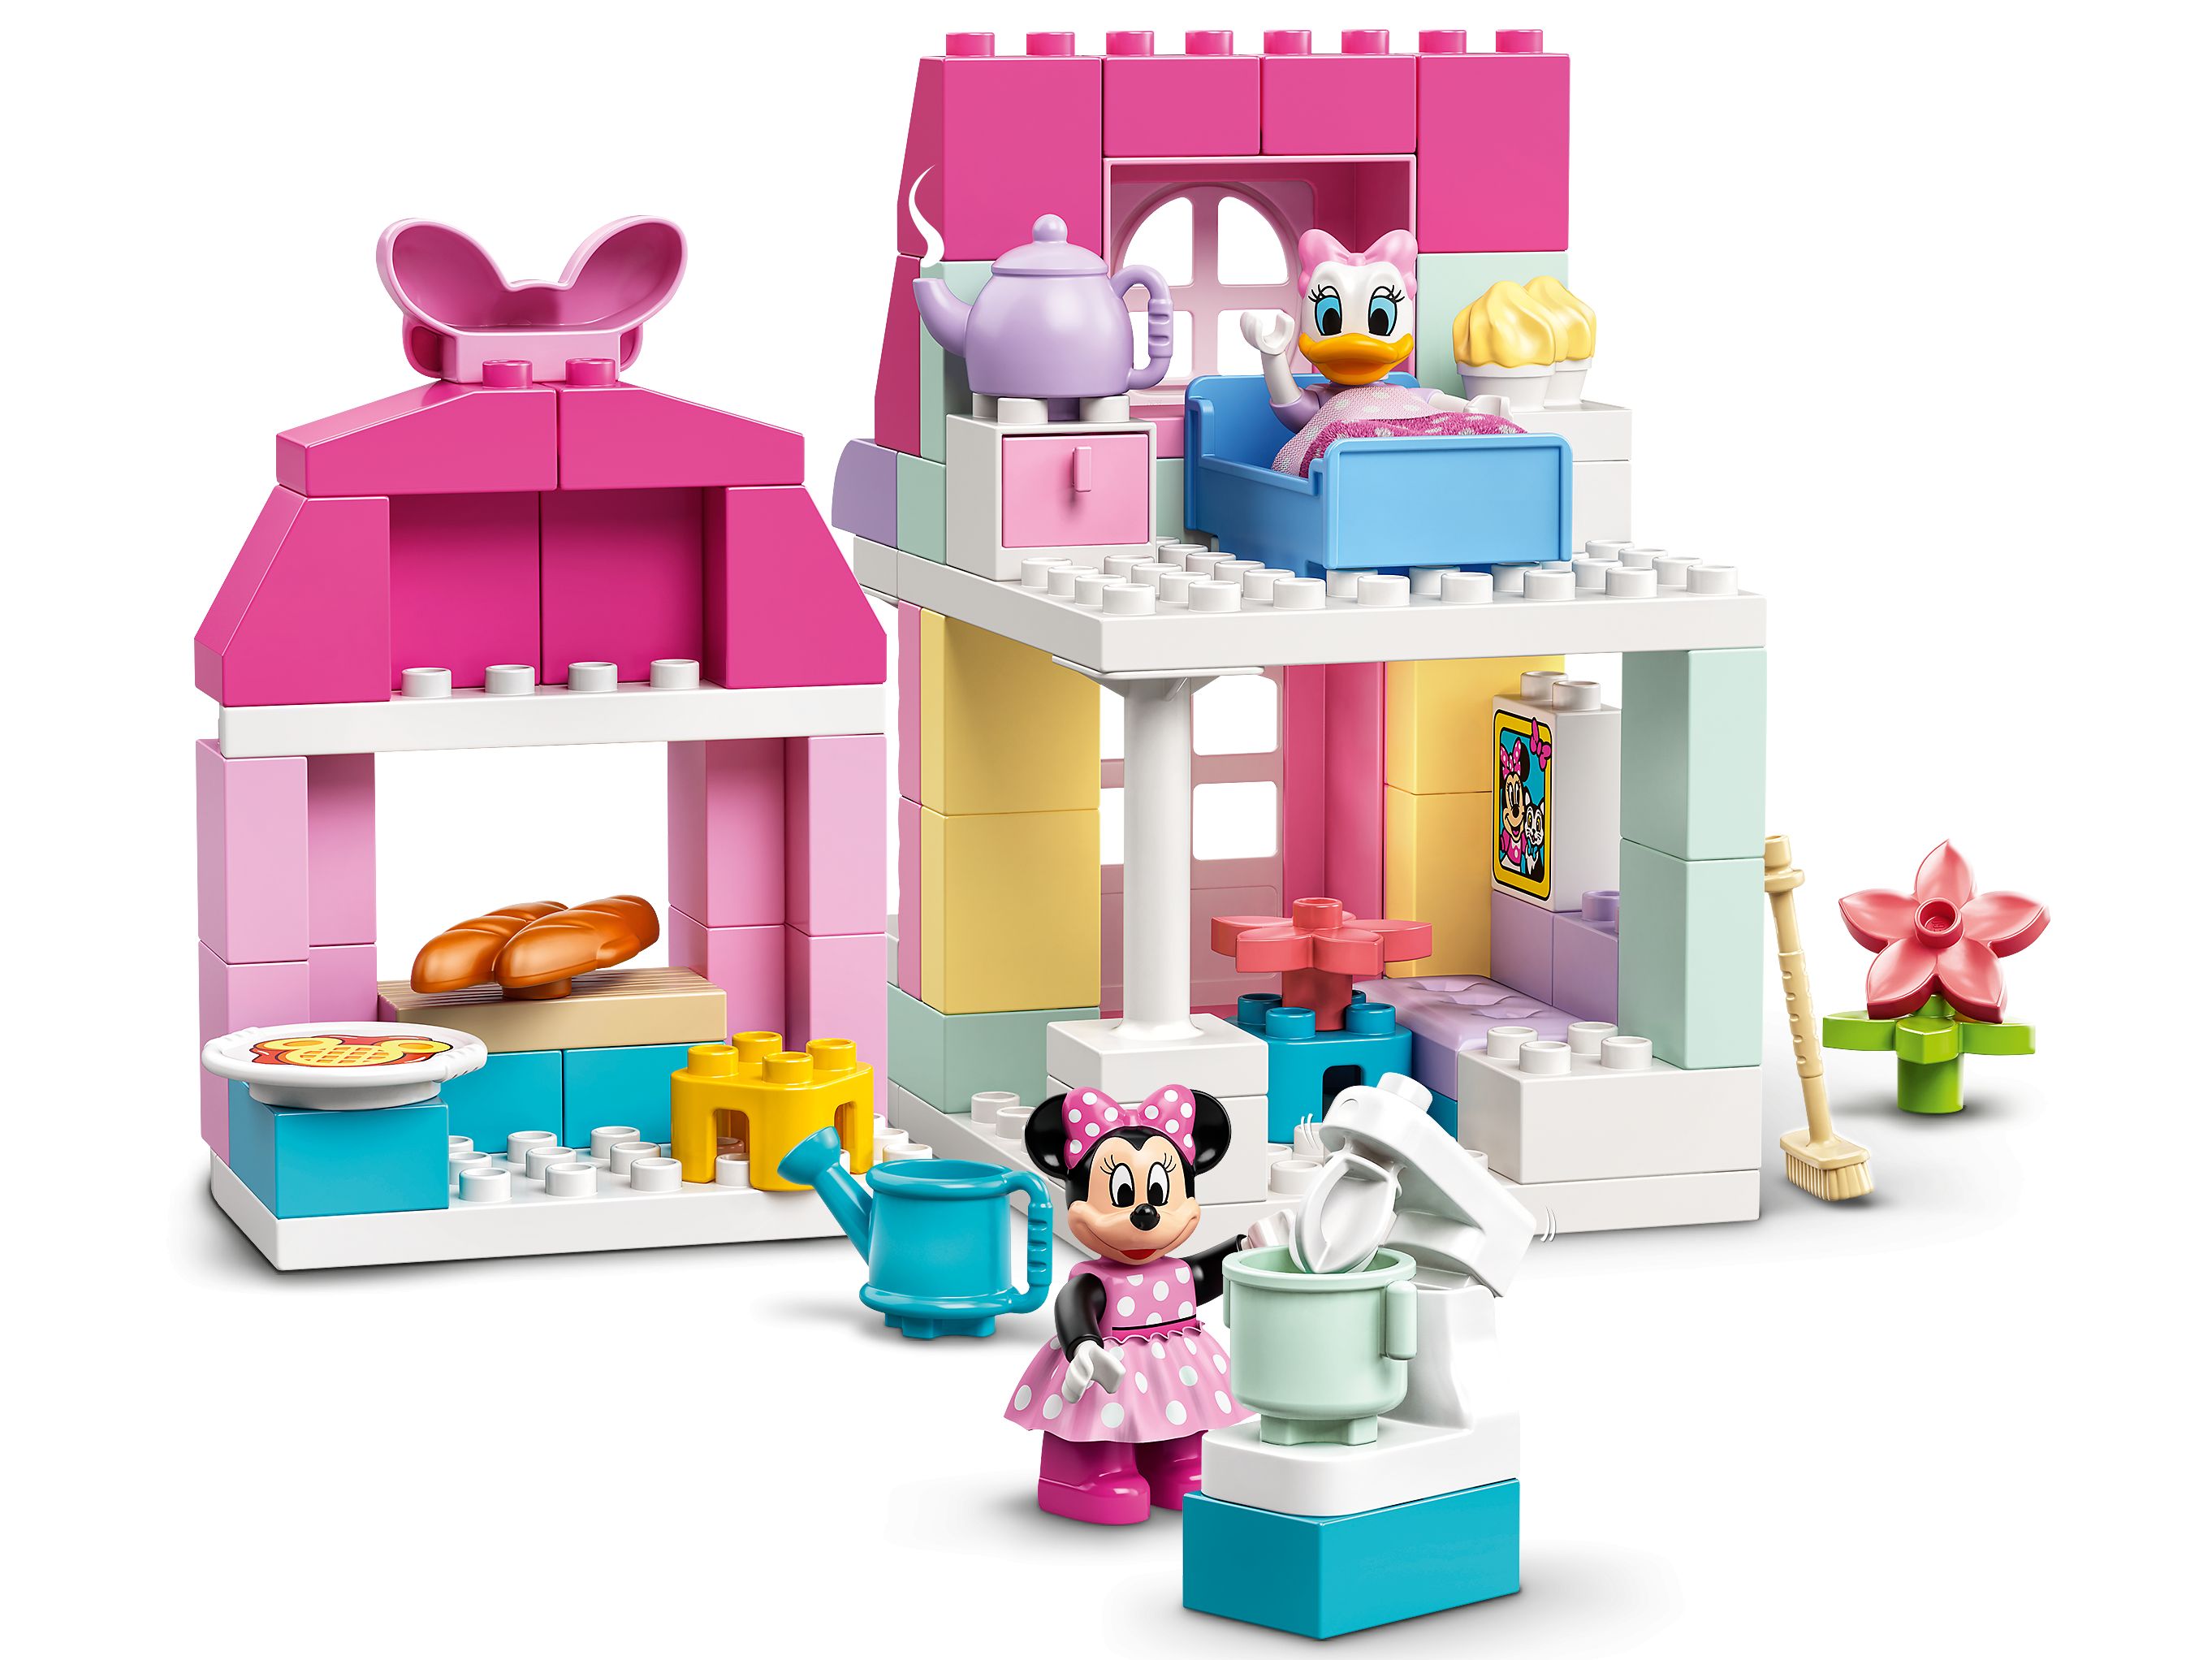 LEGO Duplo 10942 Minnies Haus mit Café LEGO_10942_alt3.jpg